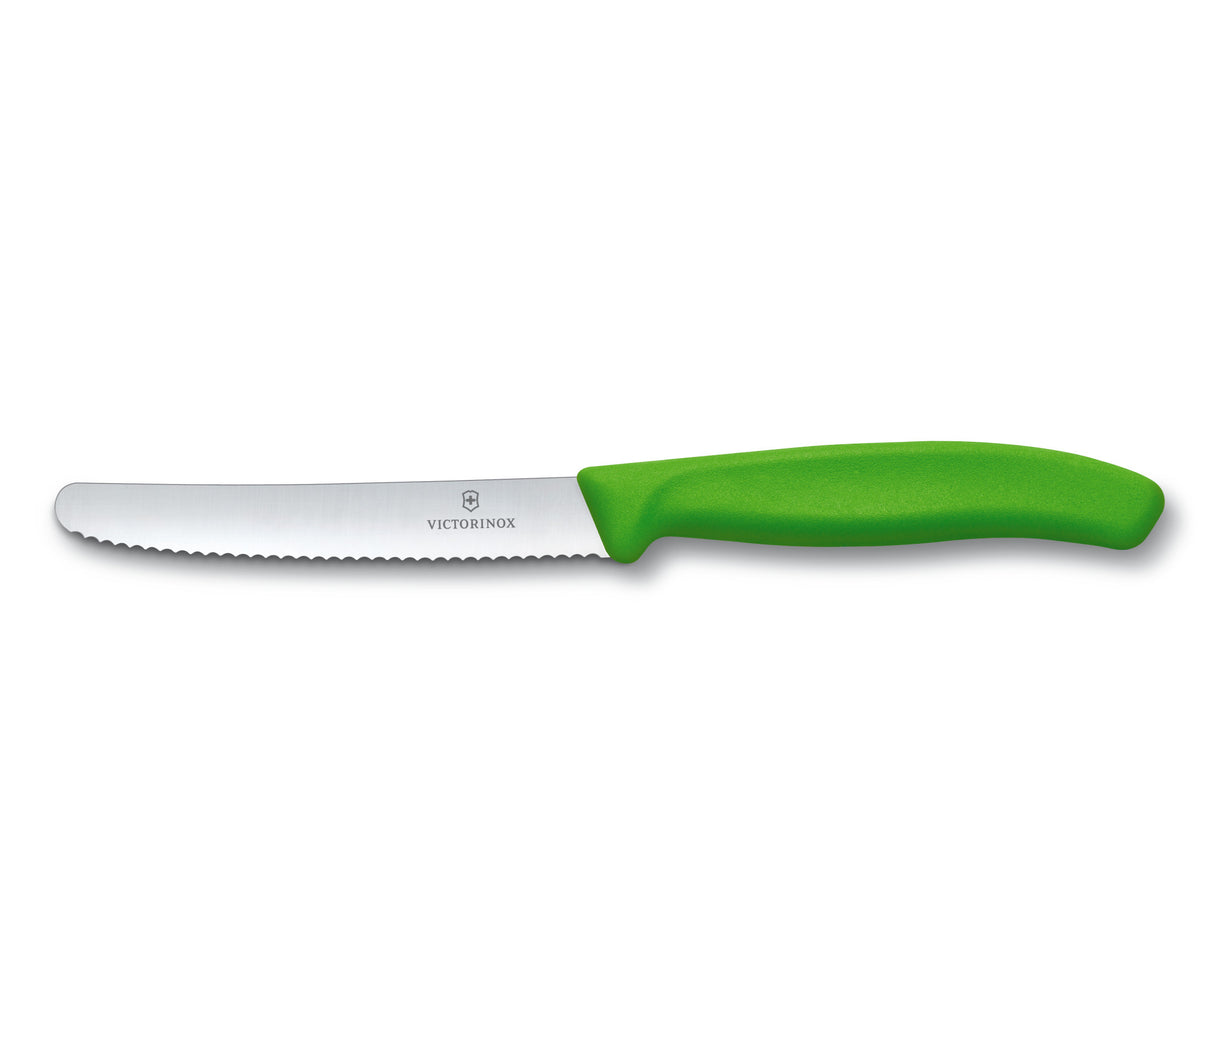 VICTORINOX COLORED UTLITY KNIFE GREEN